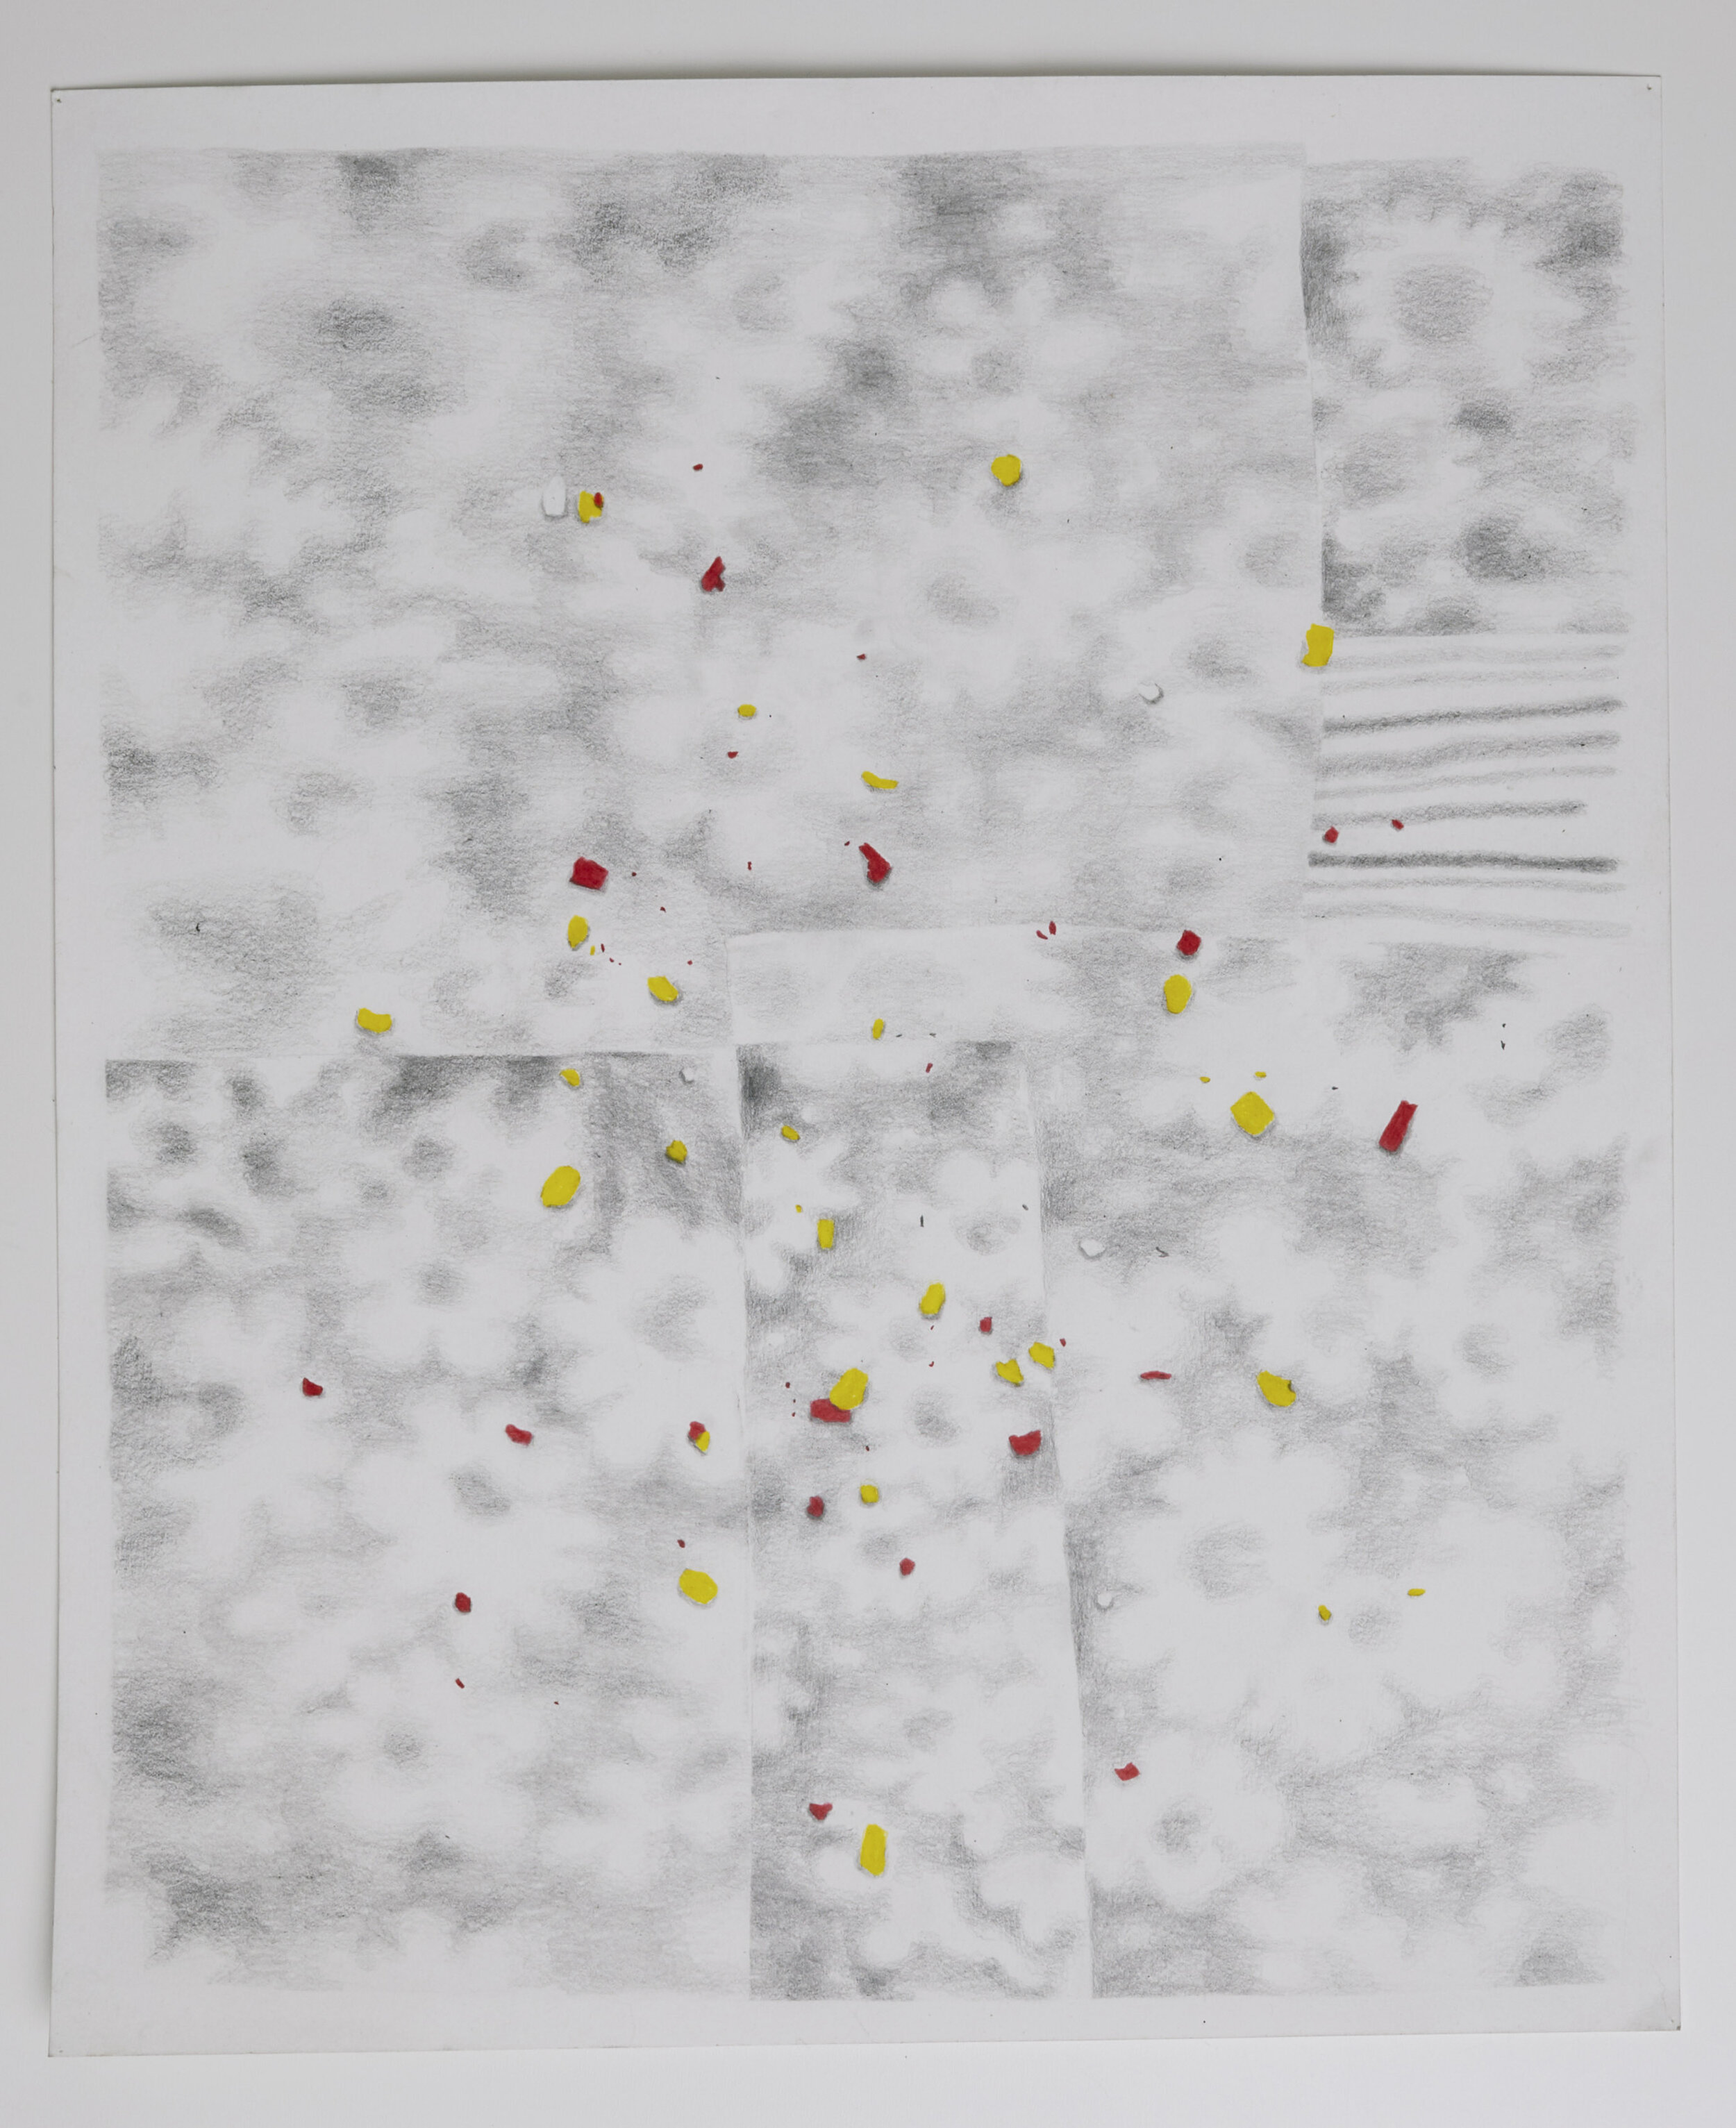  Untitled (soft garden)  Graphite and Colored Pencil on Bristol paper 2021  14” x 17” 